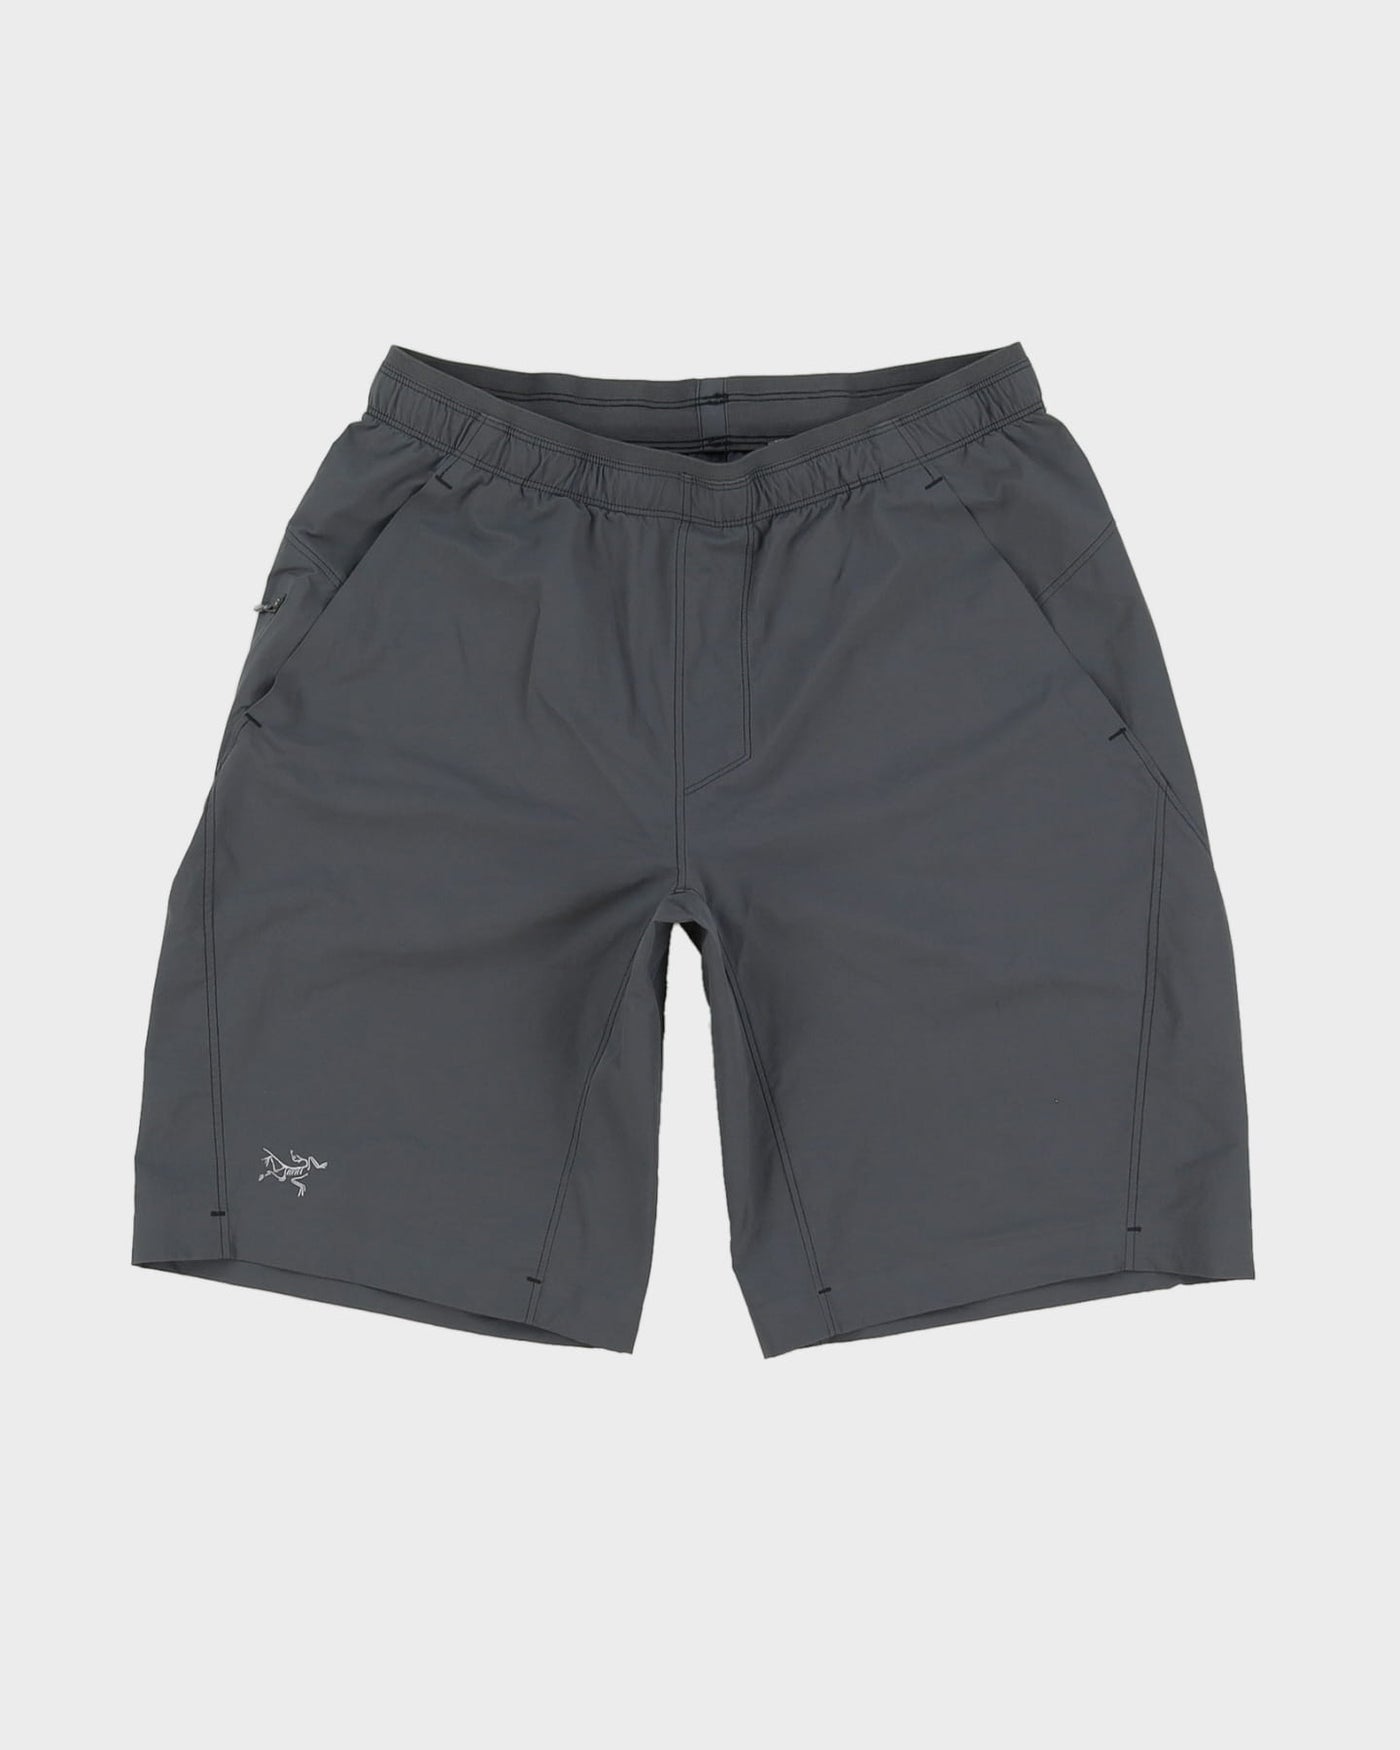 Arc'Teryx Grey Tech / Utility Shorts - S